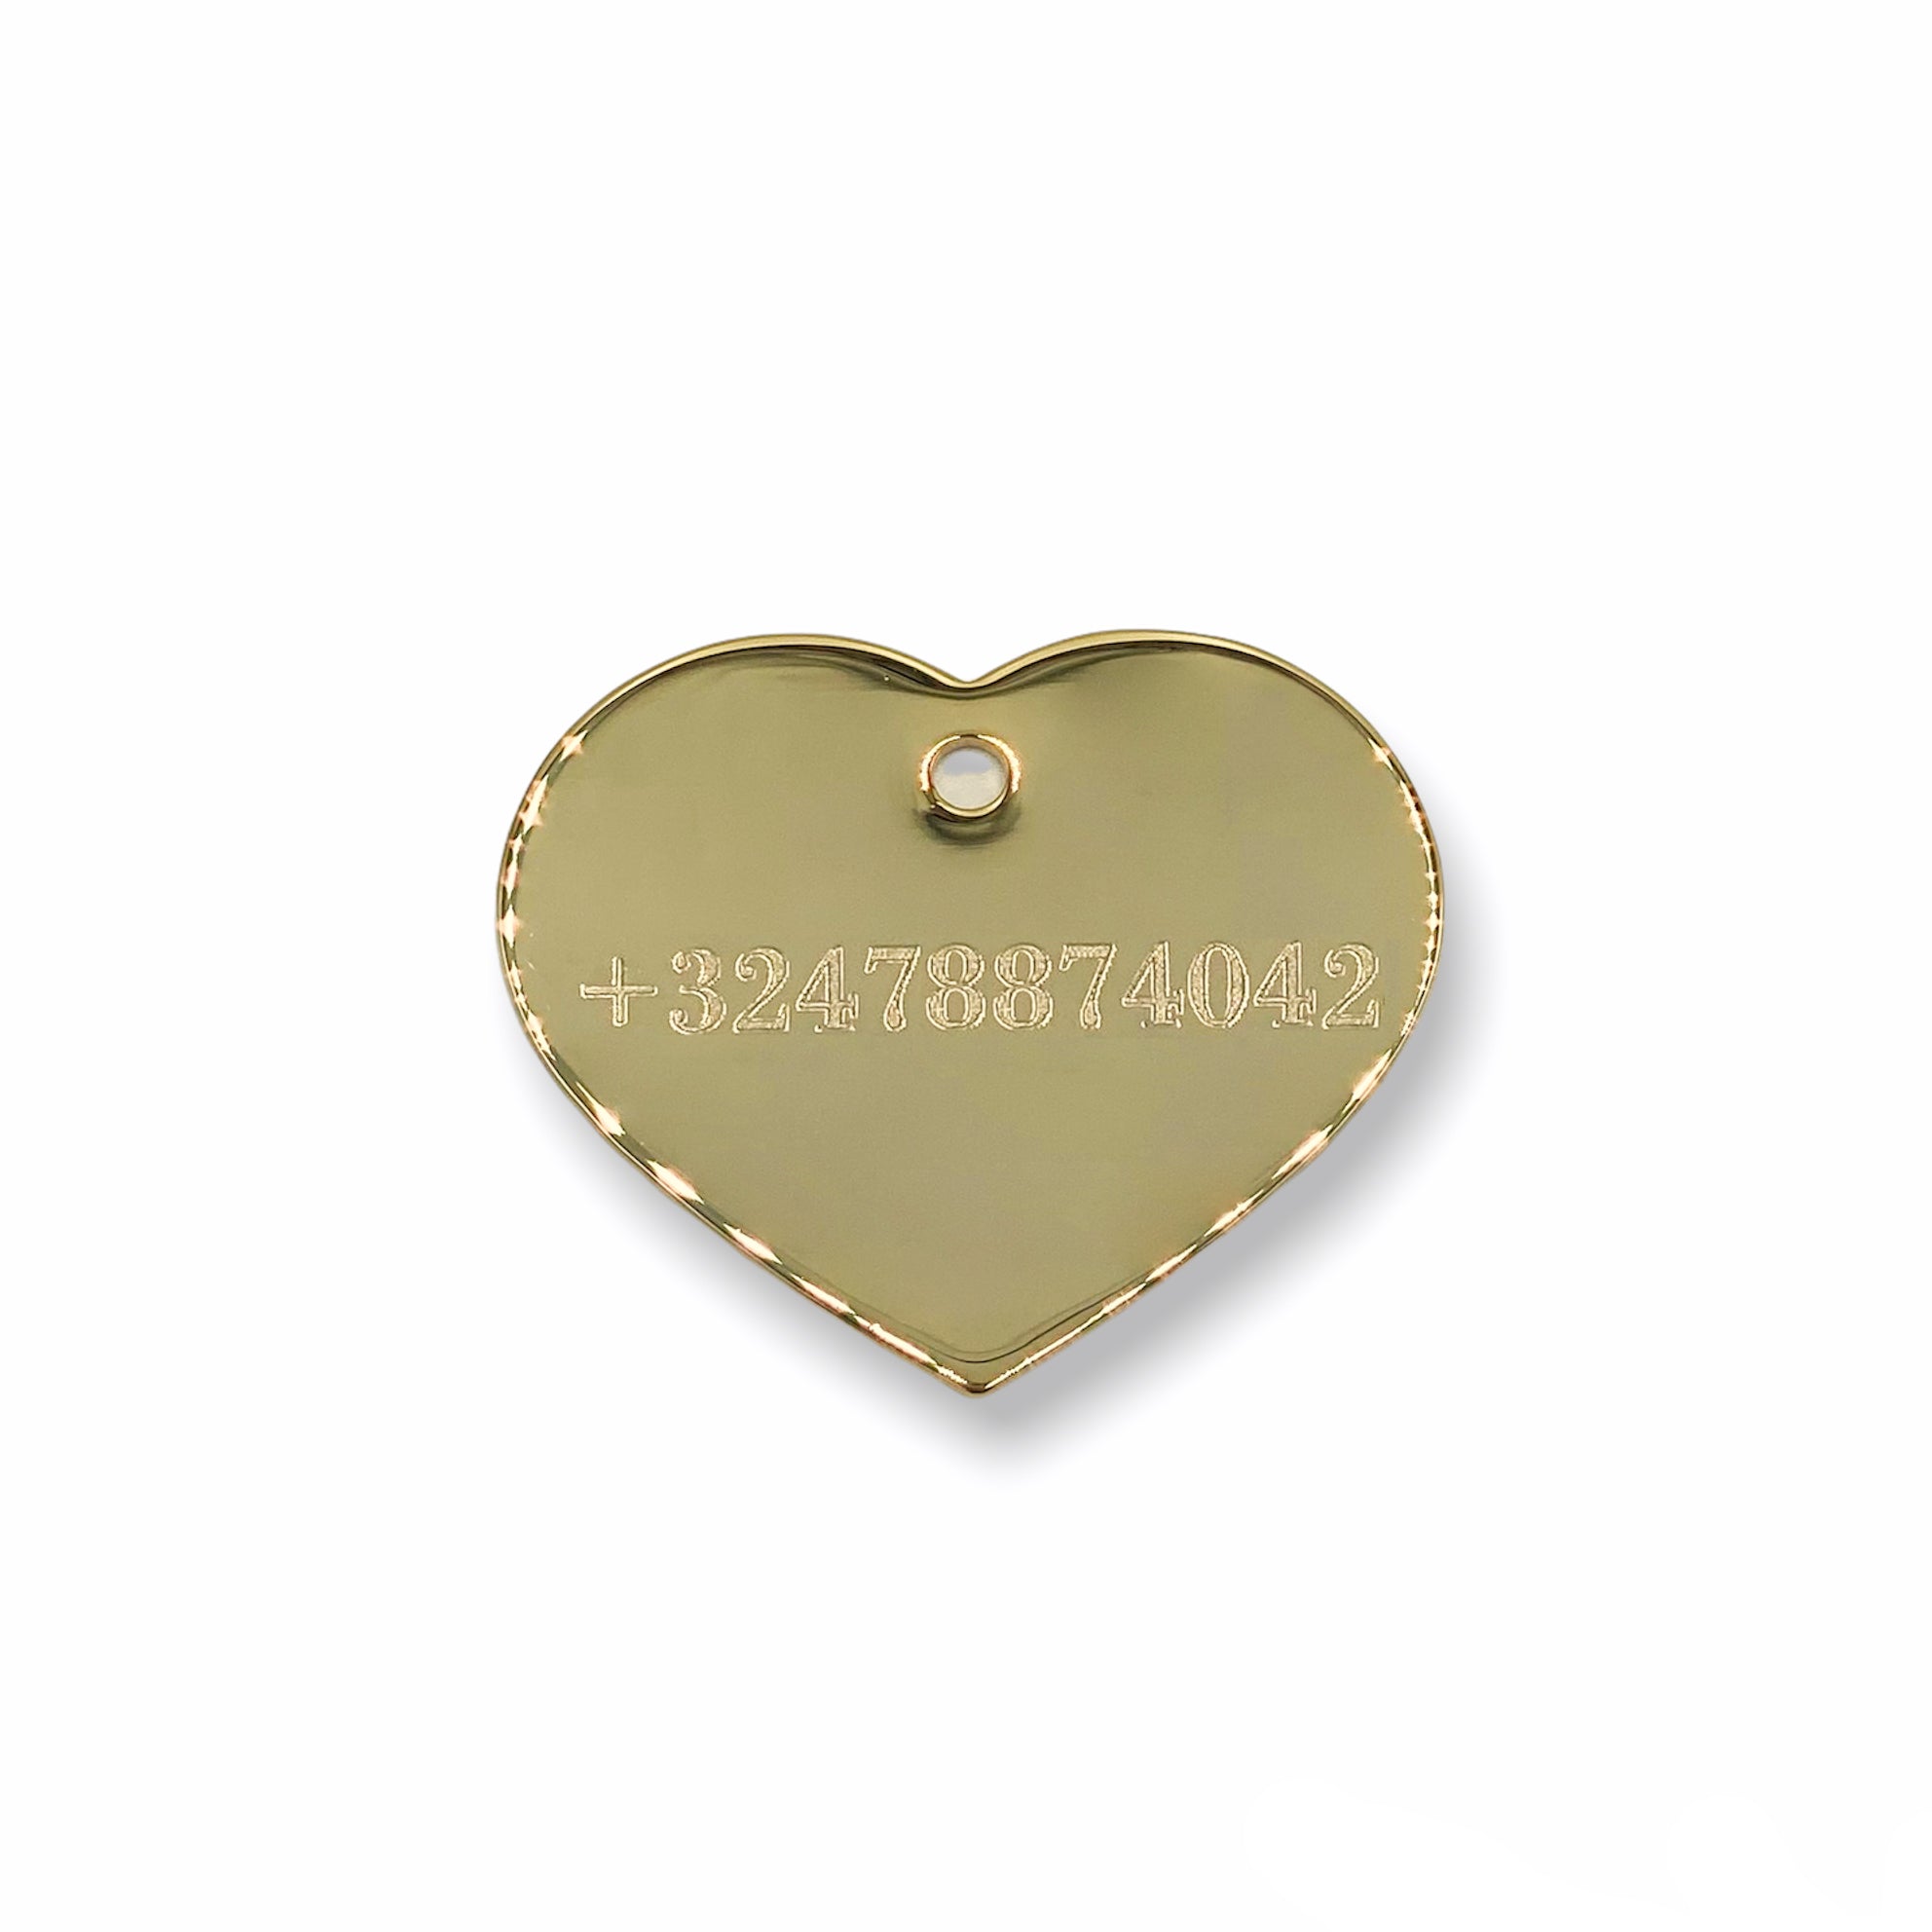 Heart Shaped Prestige Dog Tag - Gold